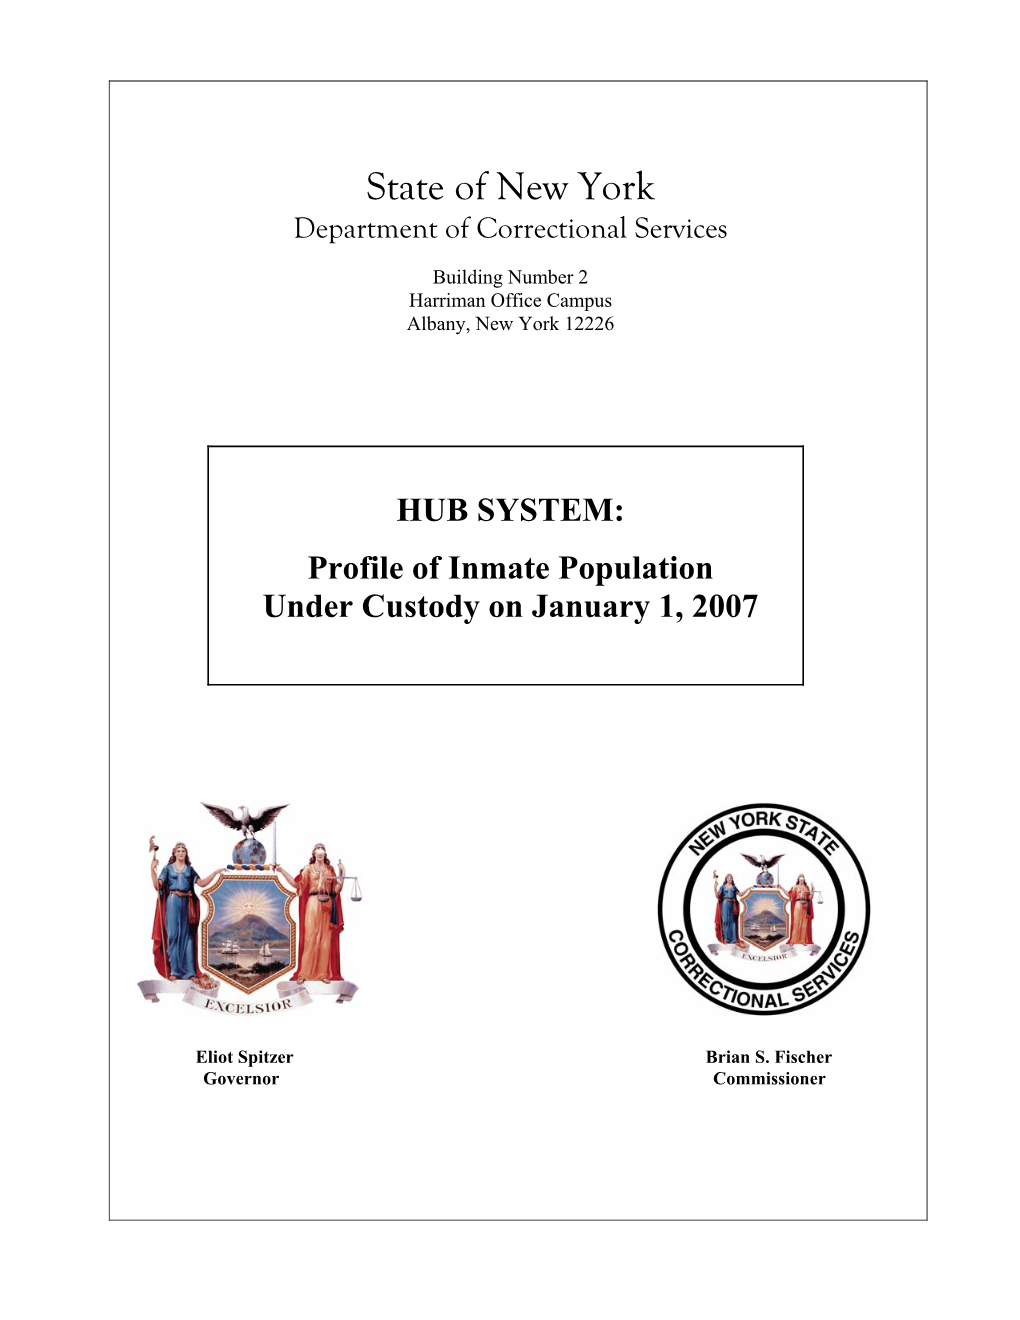 Hub System: Profile of Inmate Population Undercustody As of Jan